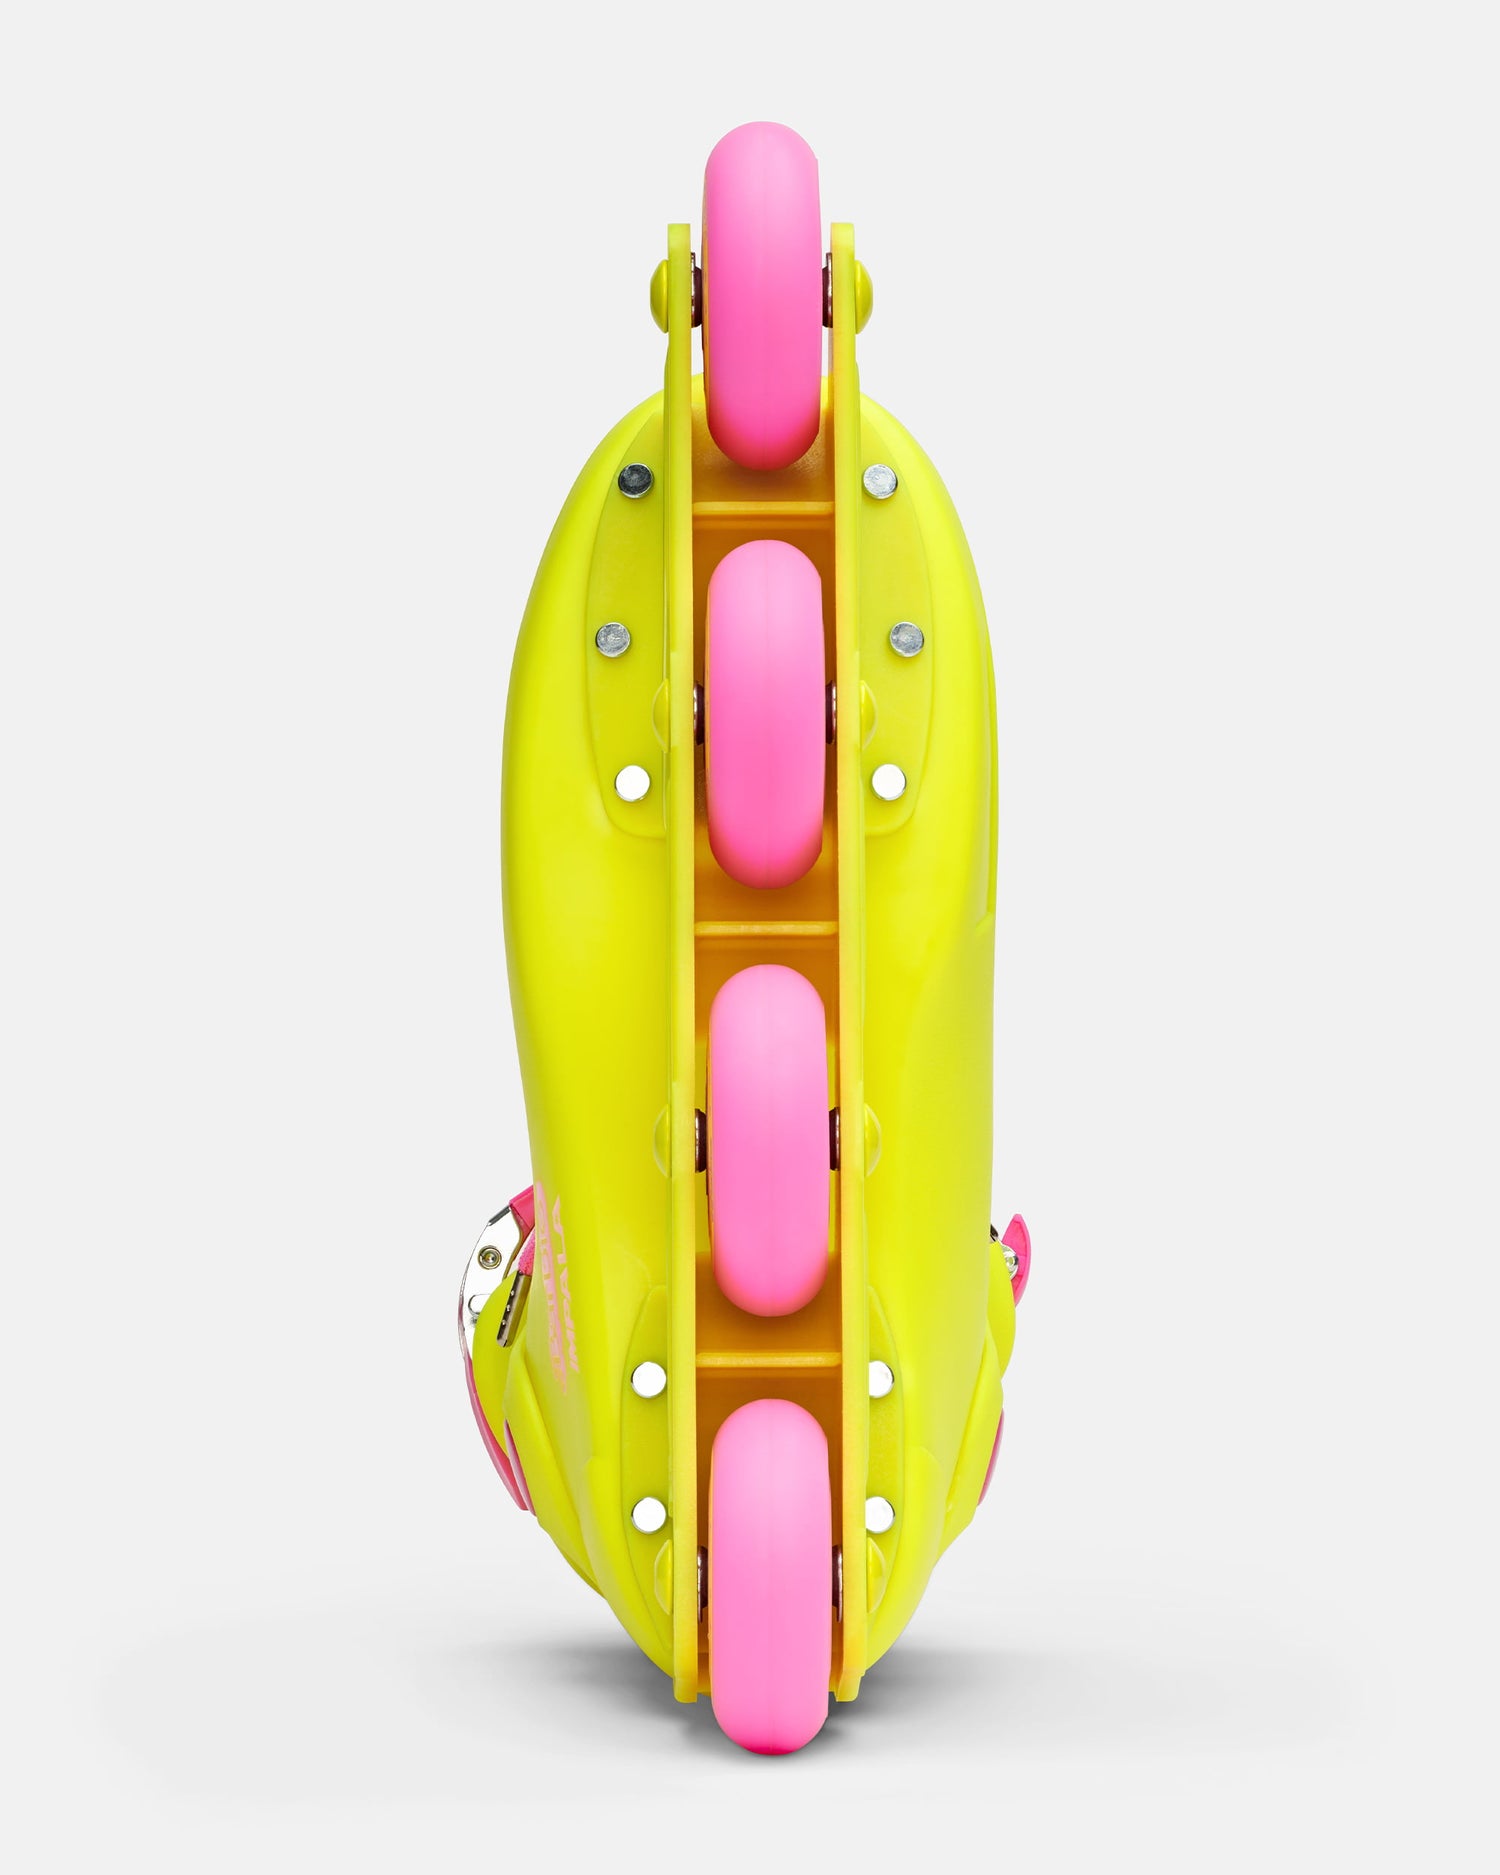 Bottom view of the Impala Lightspeed Inline Skate - Barbie Bright Yellow